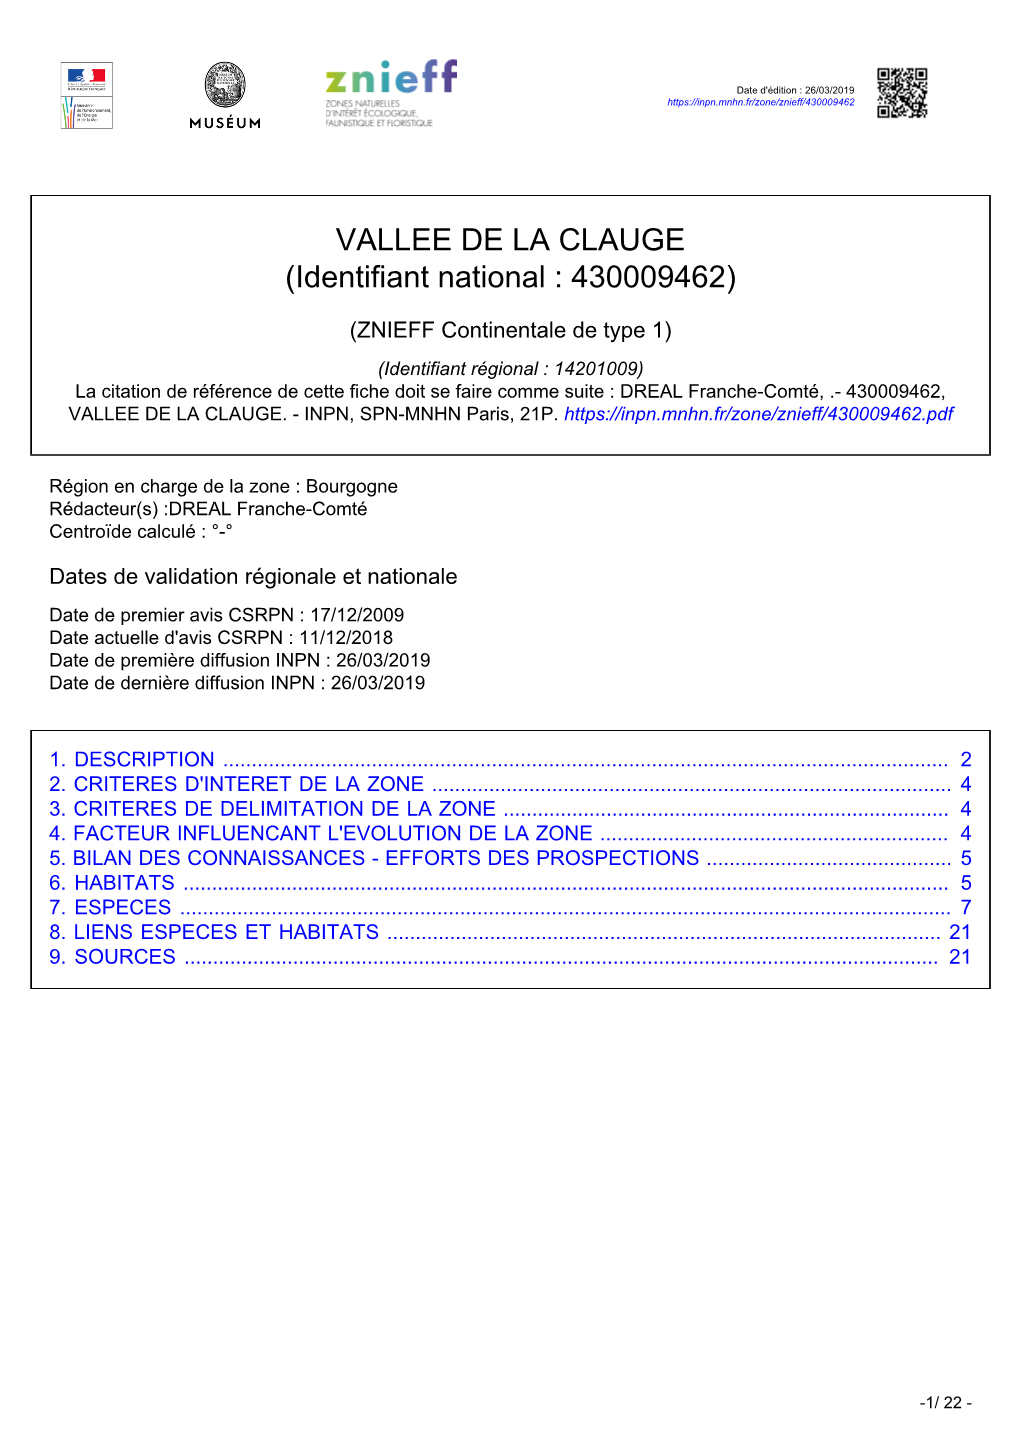 VALLEE DE LA CLAUGE (Identifiant National : 430009462)